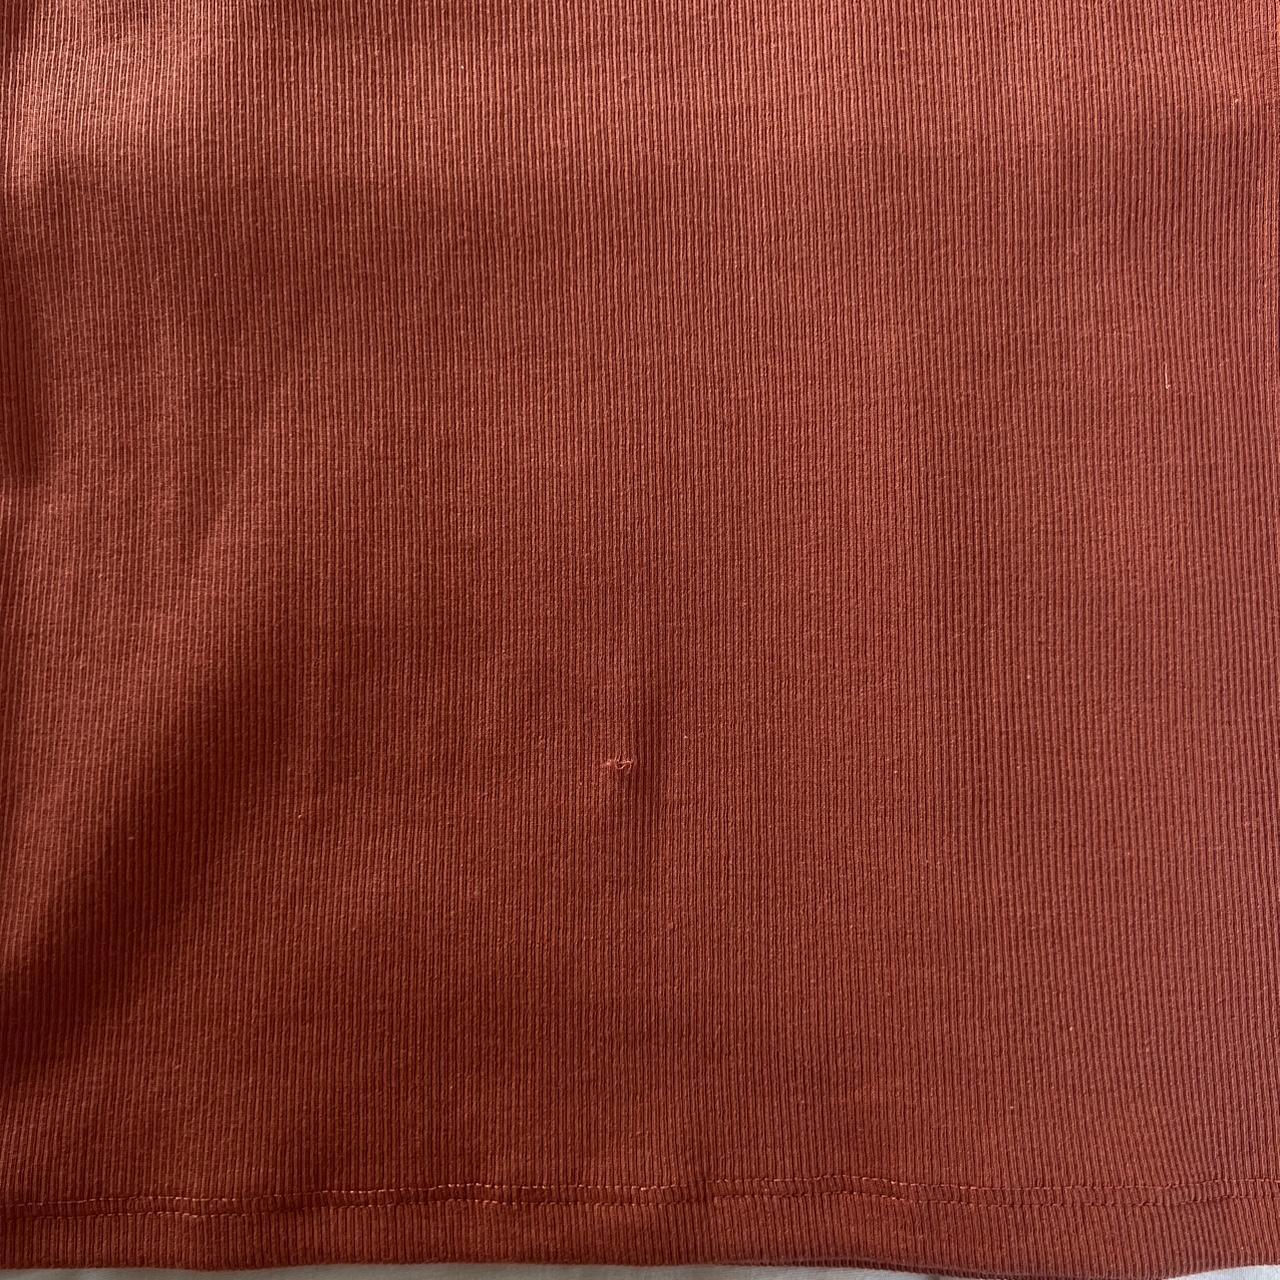 Cotton On Women's Orange and Cream T-shirt (5)